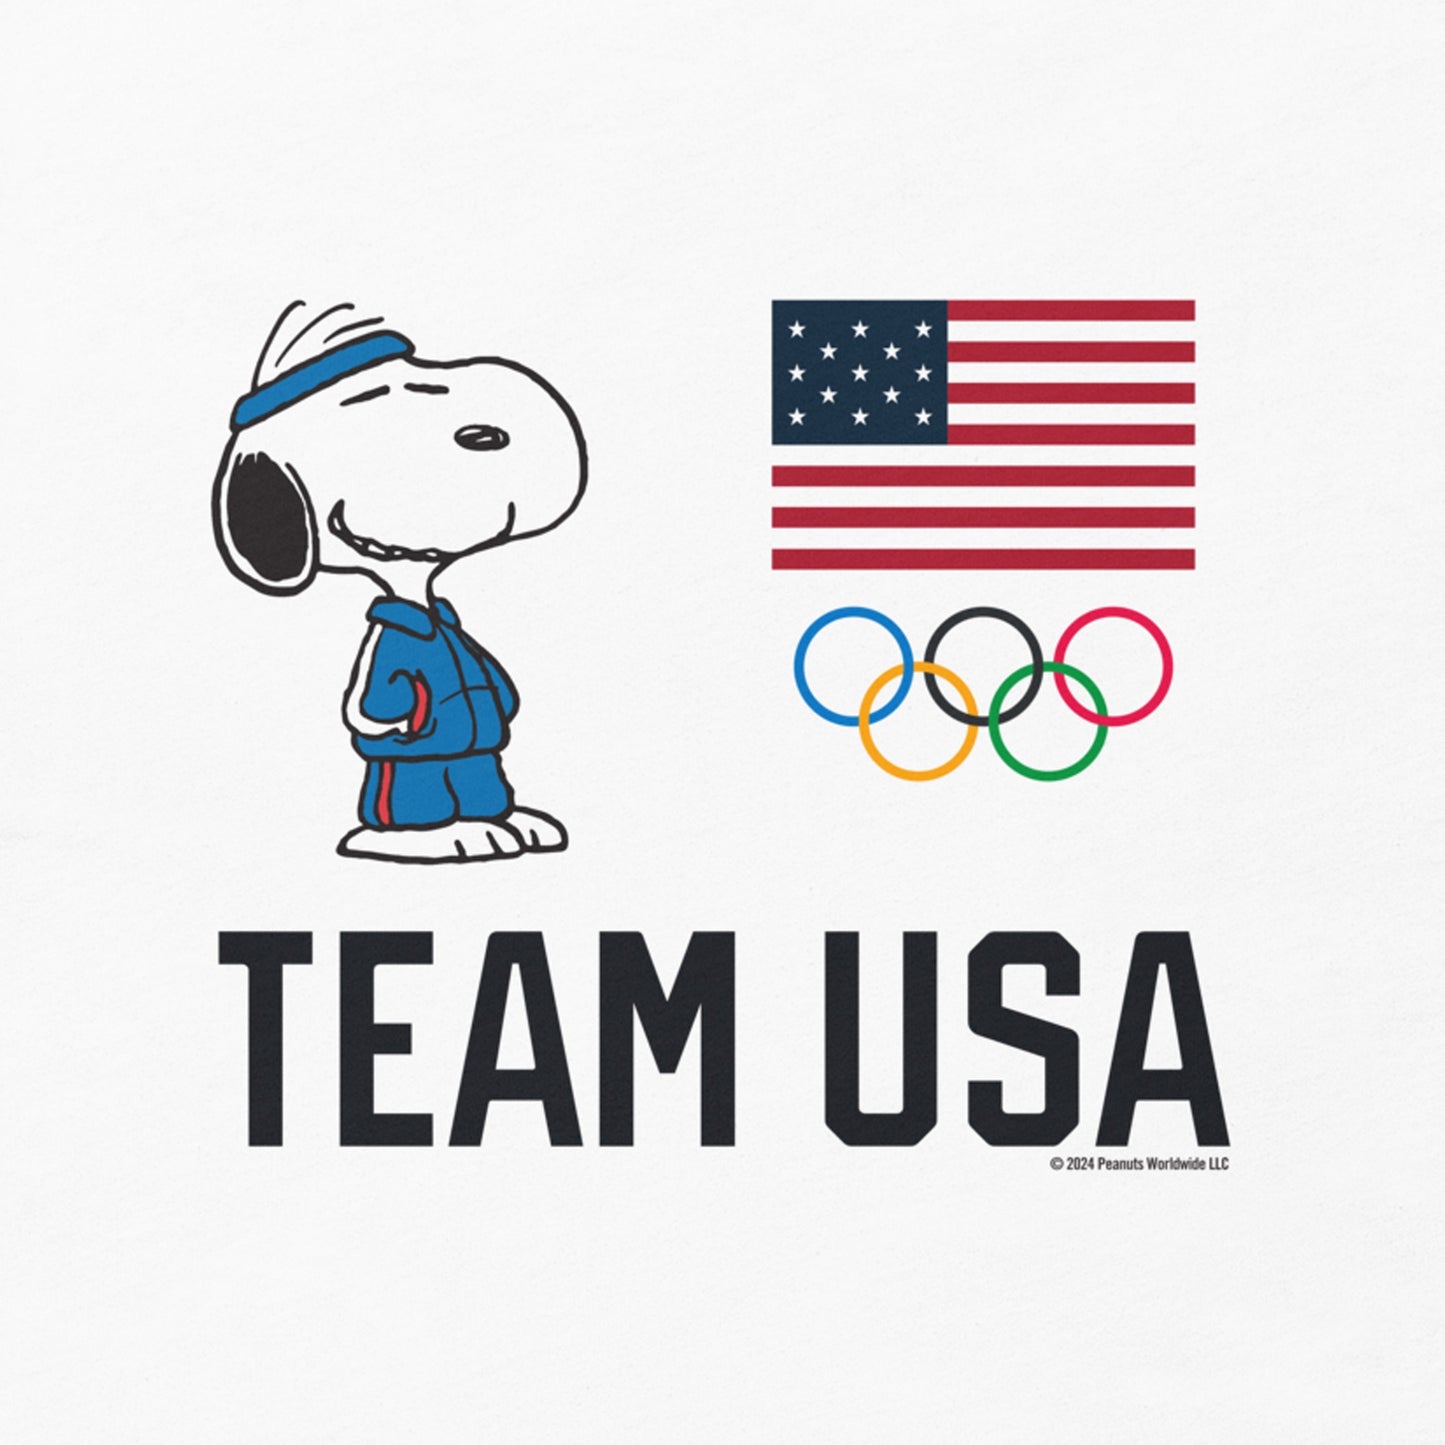 Peanuts Snoopy Team USA 5-Rings T-Shirt